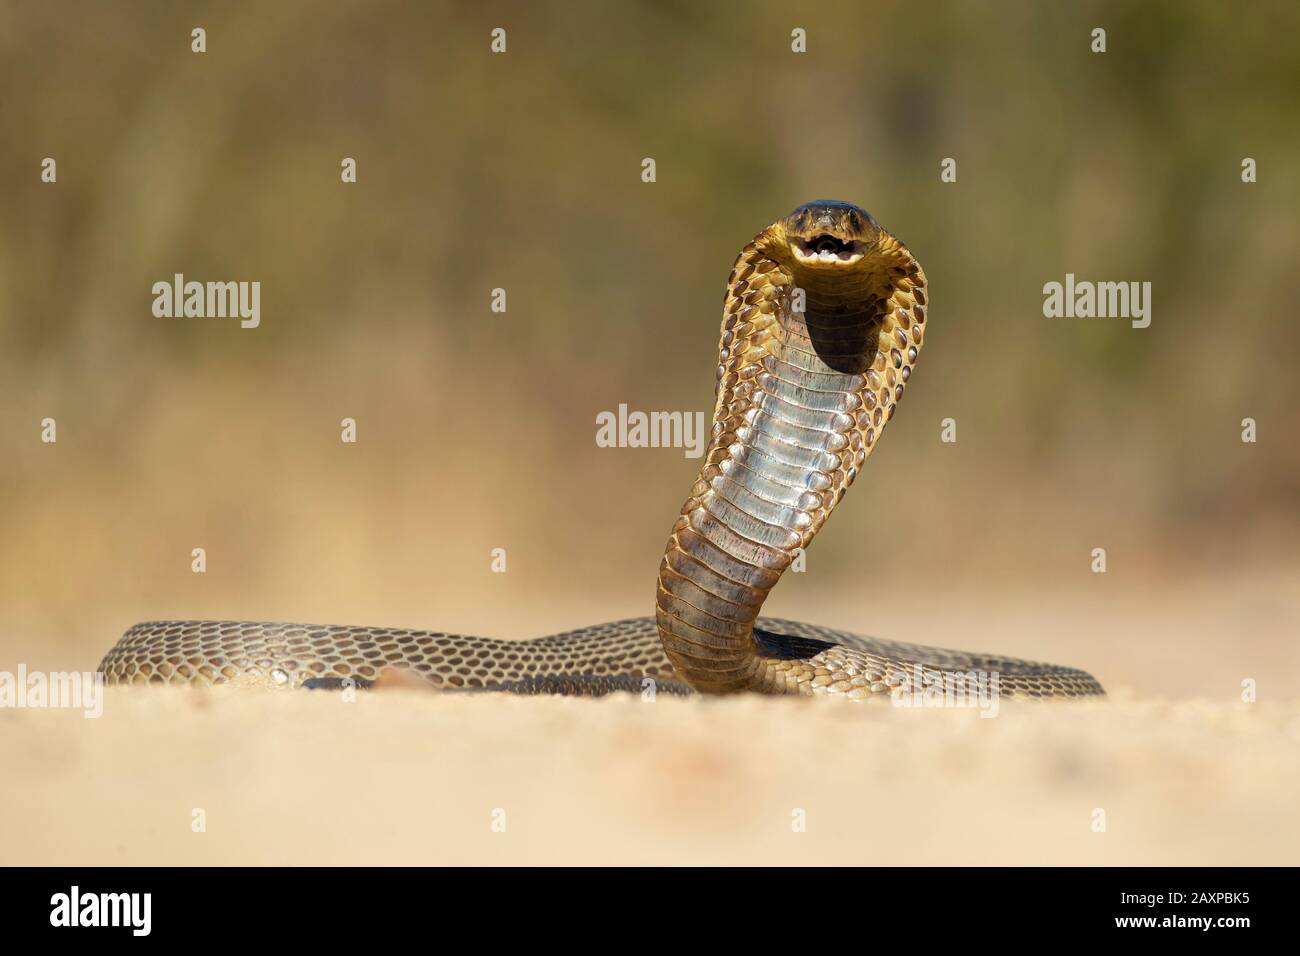 File:Snake-cobra.gif - Wikimedia Commons